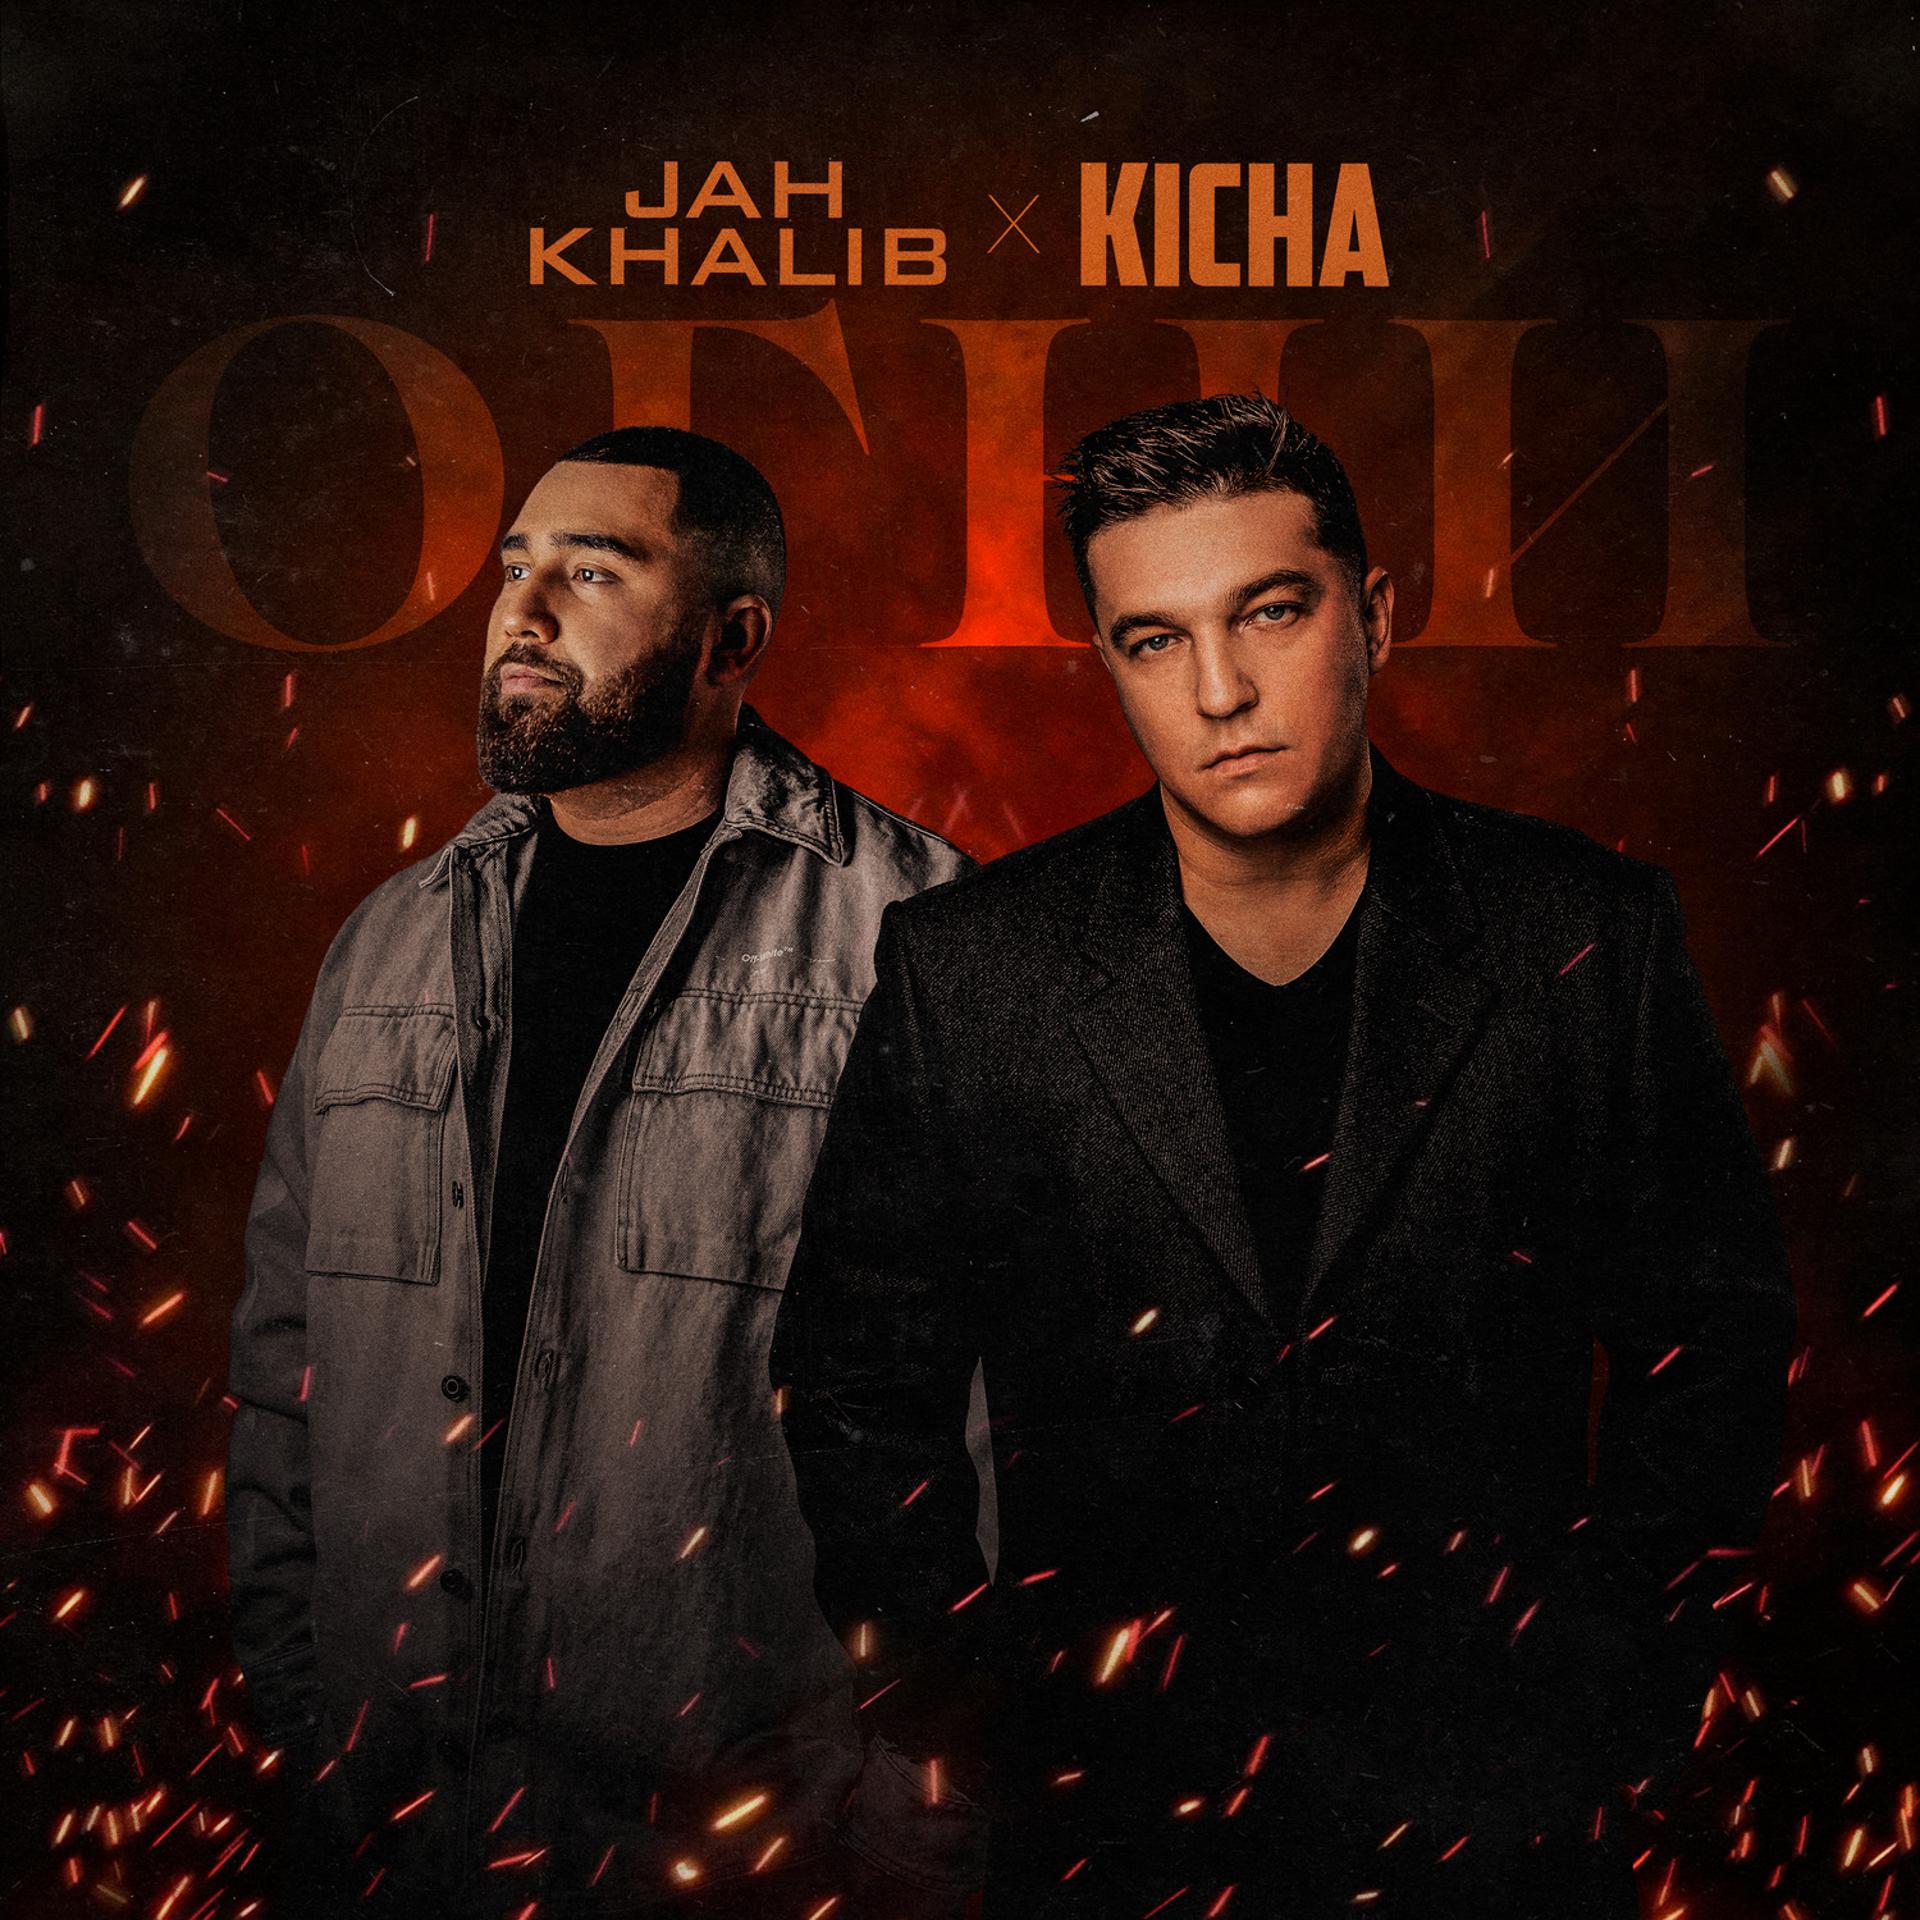 Постер к треку KICHA, Jah Khalib - огни